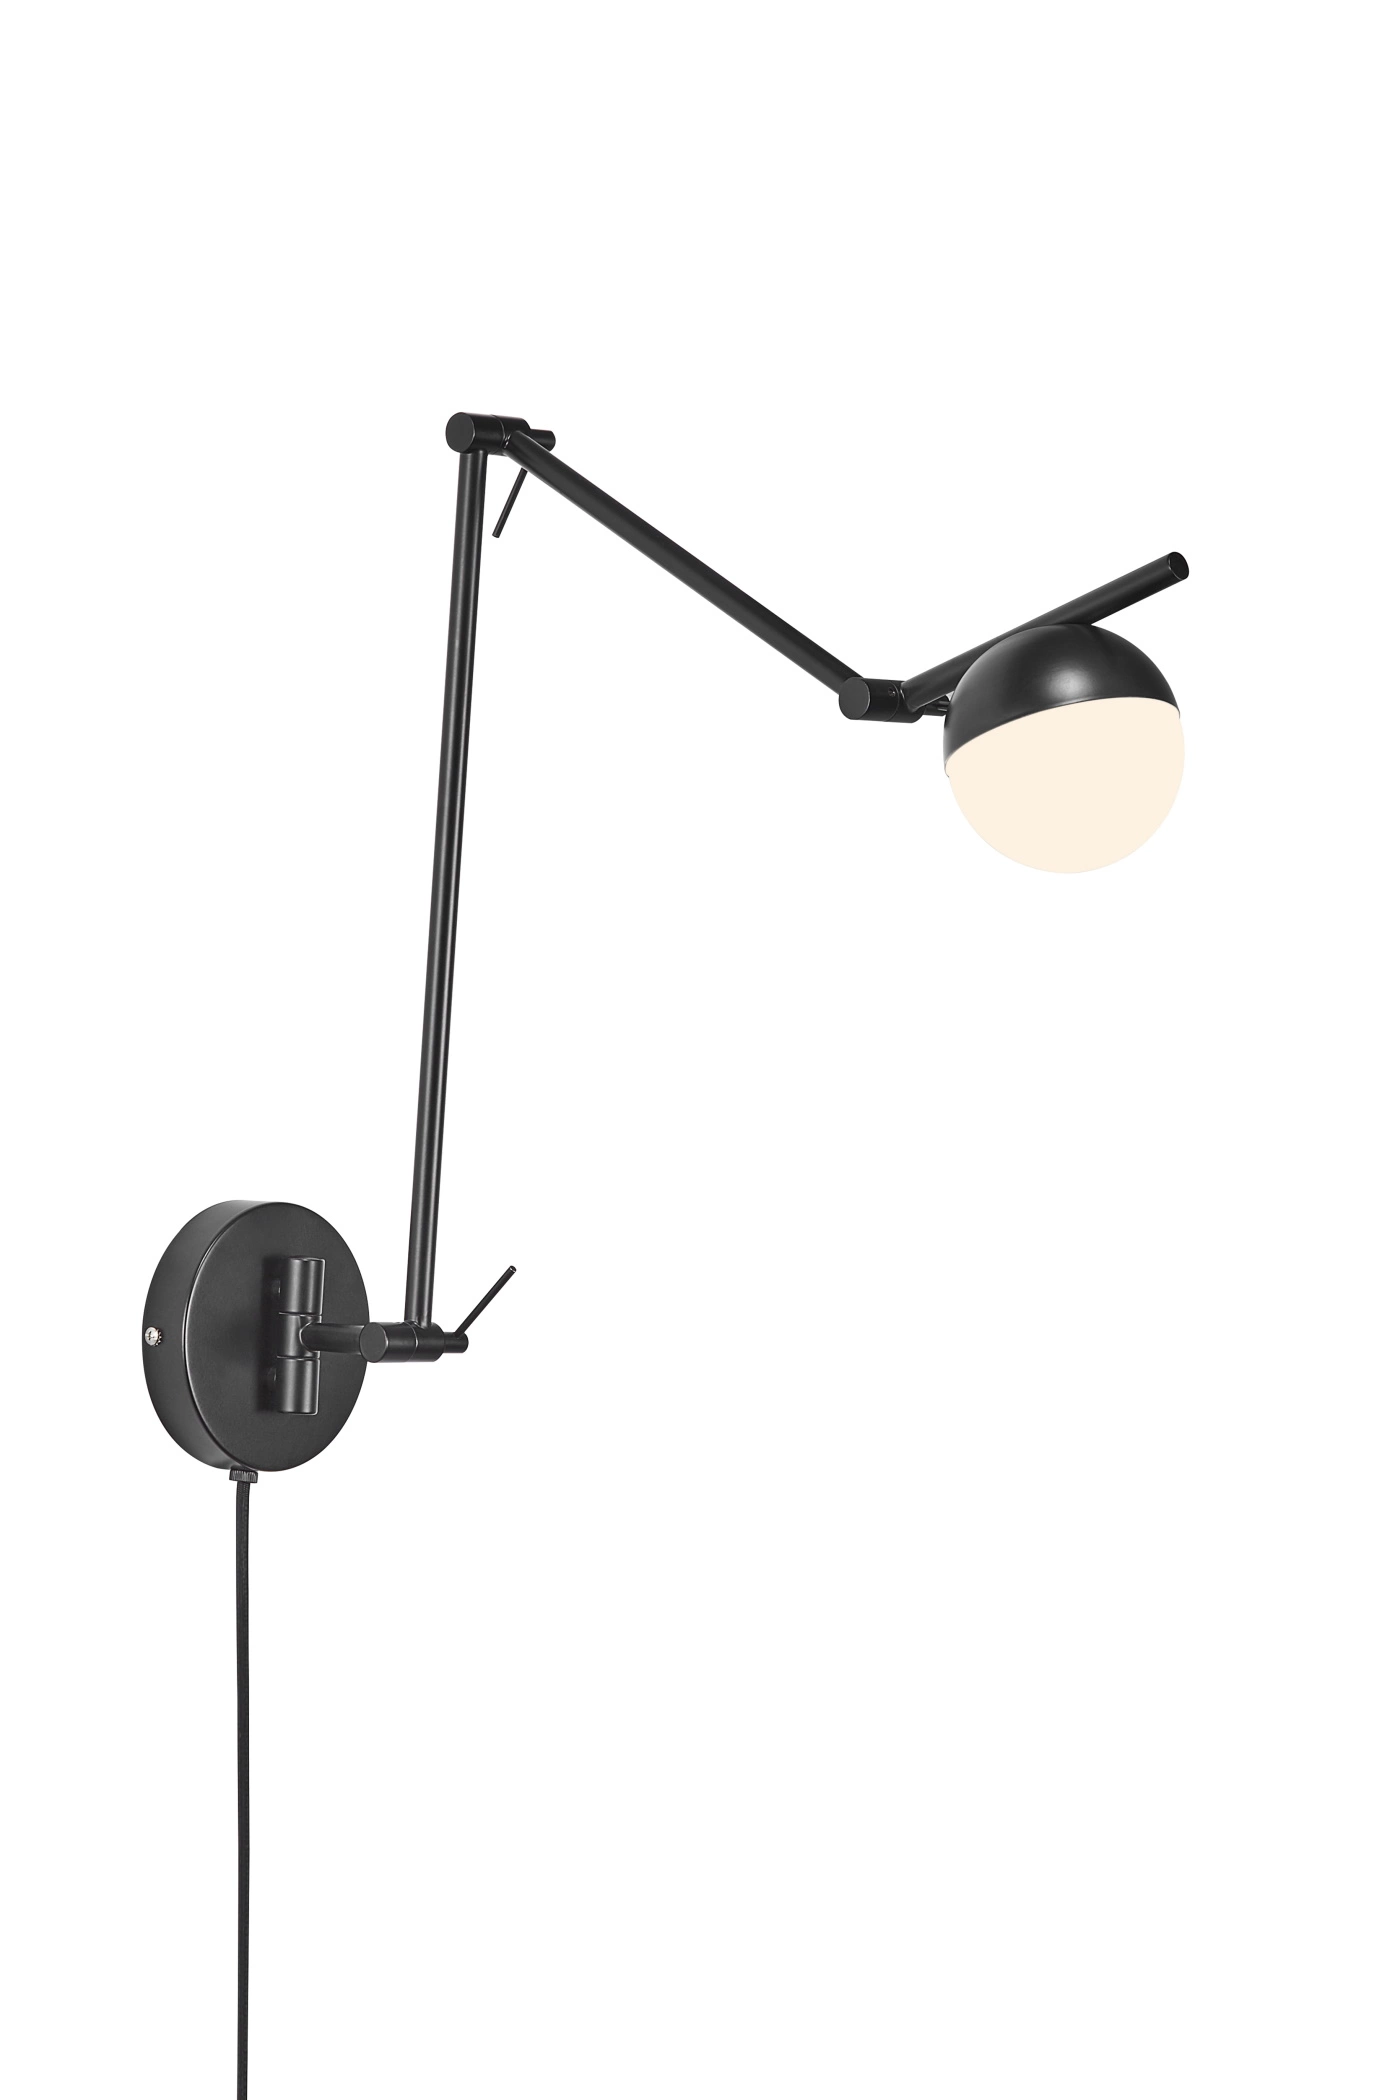   
                        
                        Бра NORDLUX (Дания) 51179    
                         в стиле Хай-тек.  
                        Тип источника света: светодиодная лампа, сменная.                                                 Цвета плафонов и подвесок: Белый.                         Материал: Стекло.                          фото 1